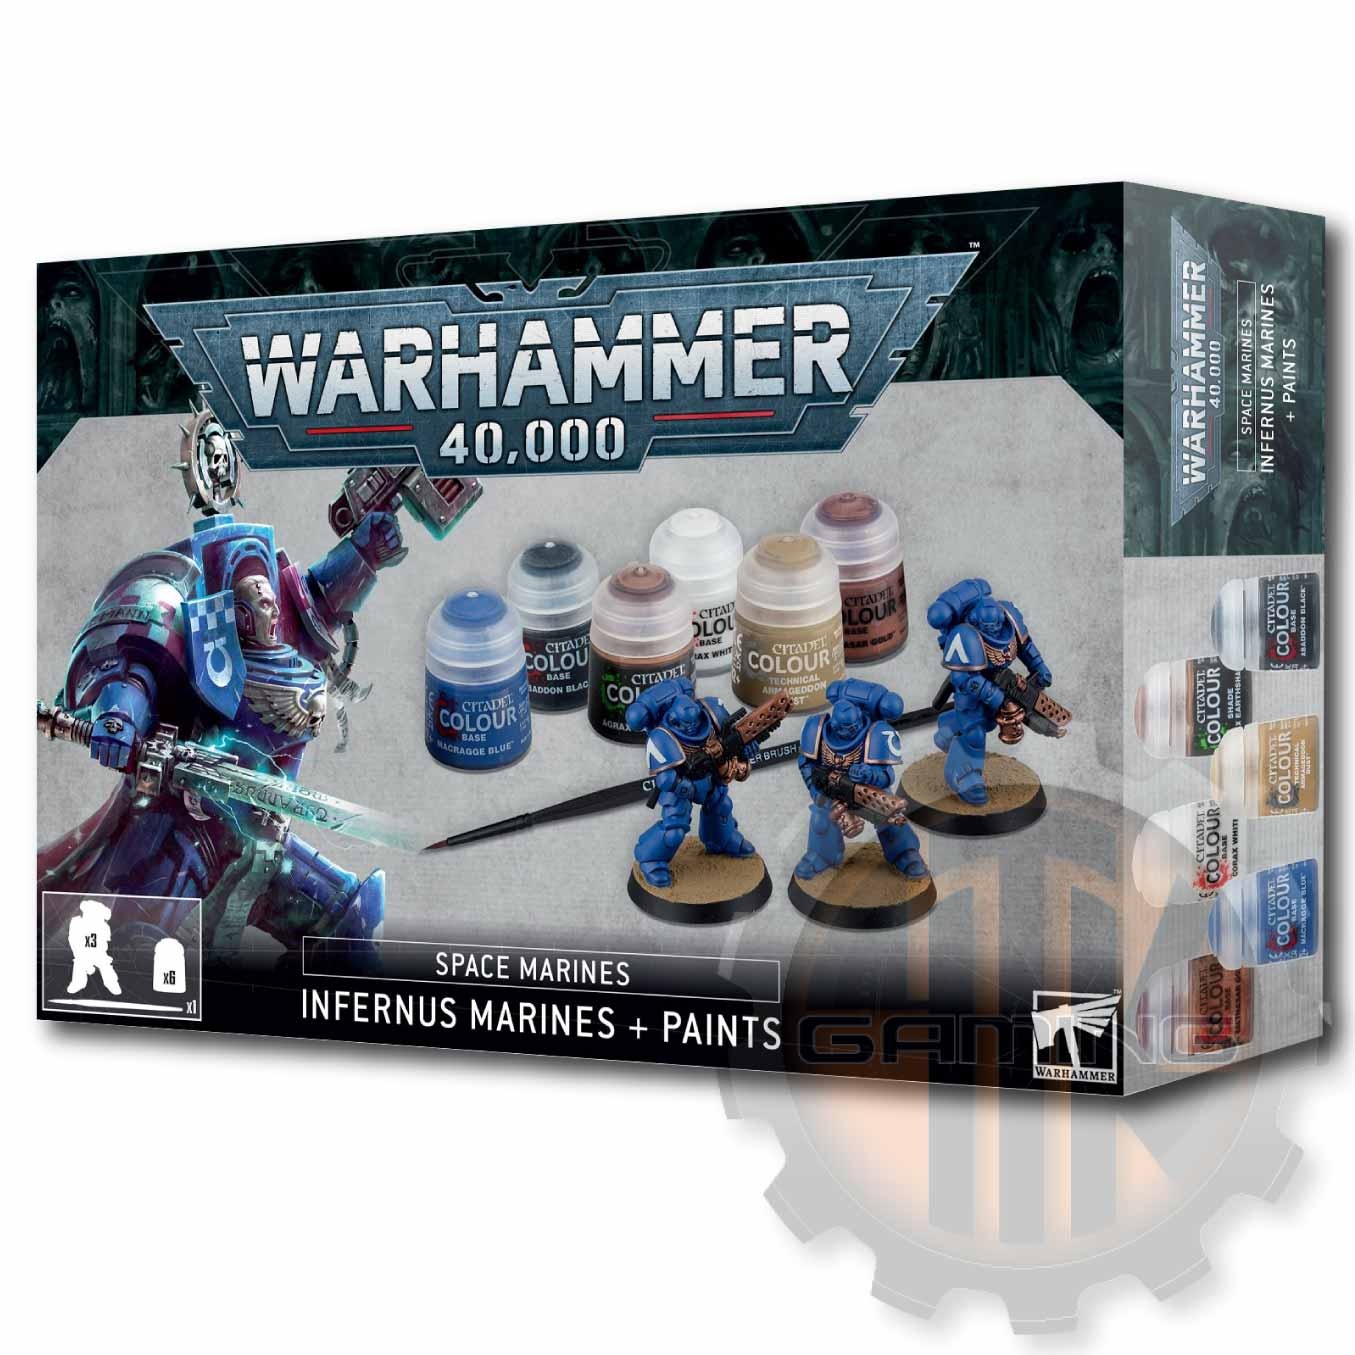 Zombicide 2nd Edition Paint Set: Incl. 20 warpaints - The Army Painter